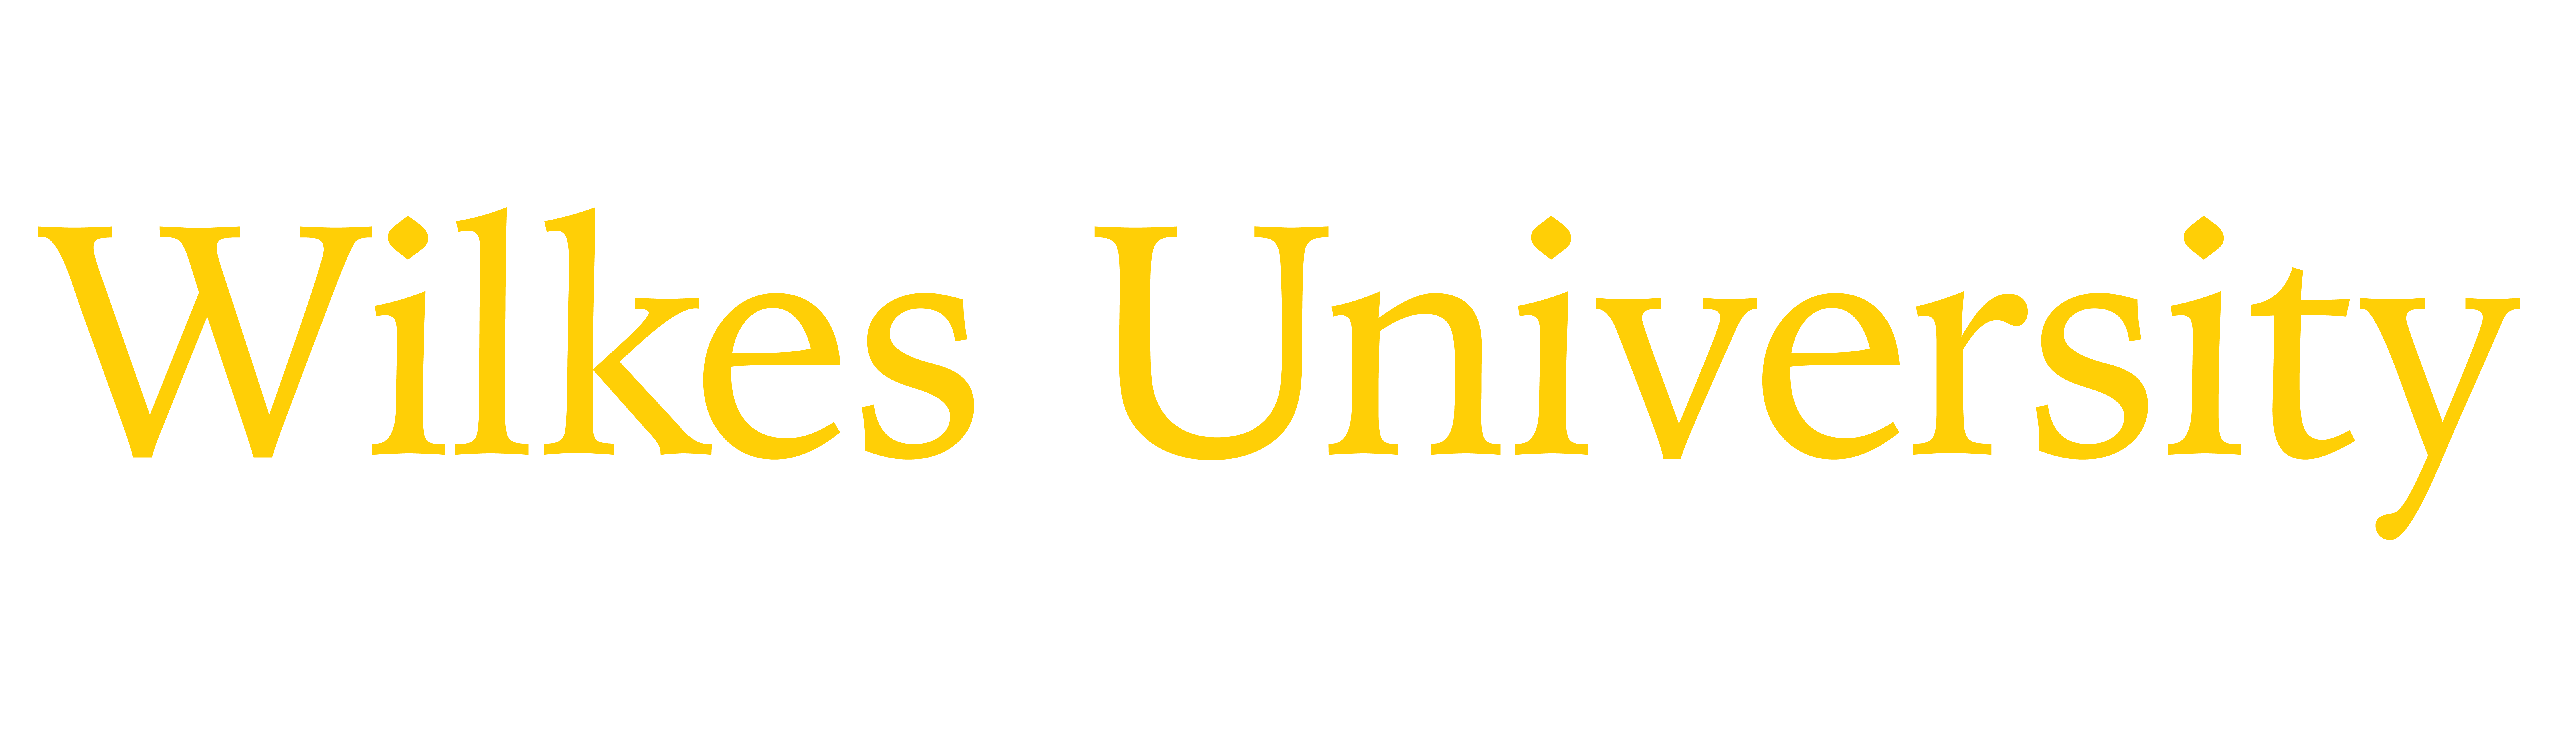 Wilkes University logo - horizontal with gold text